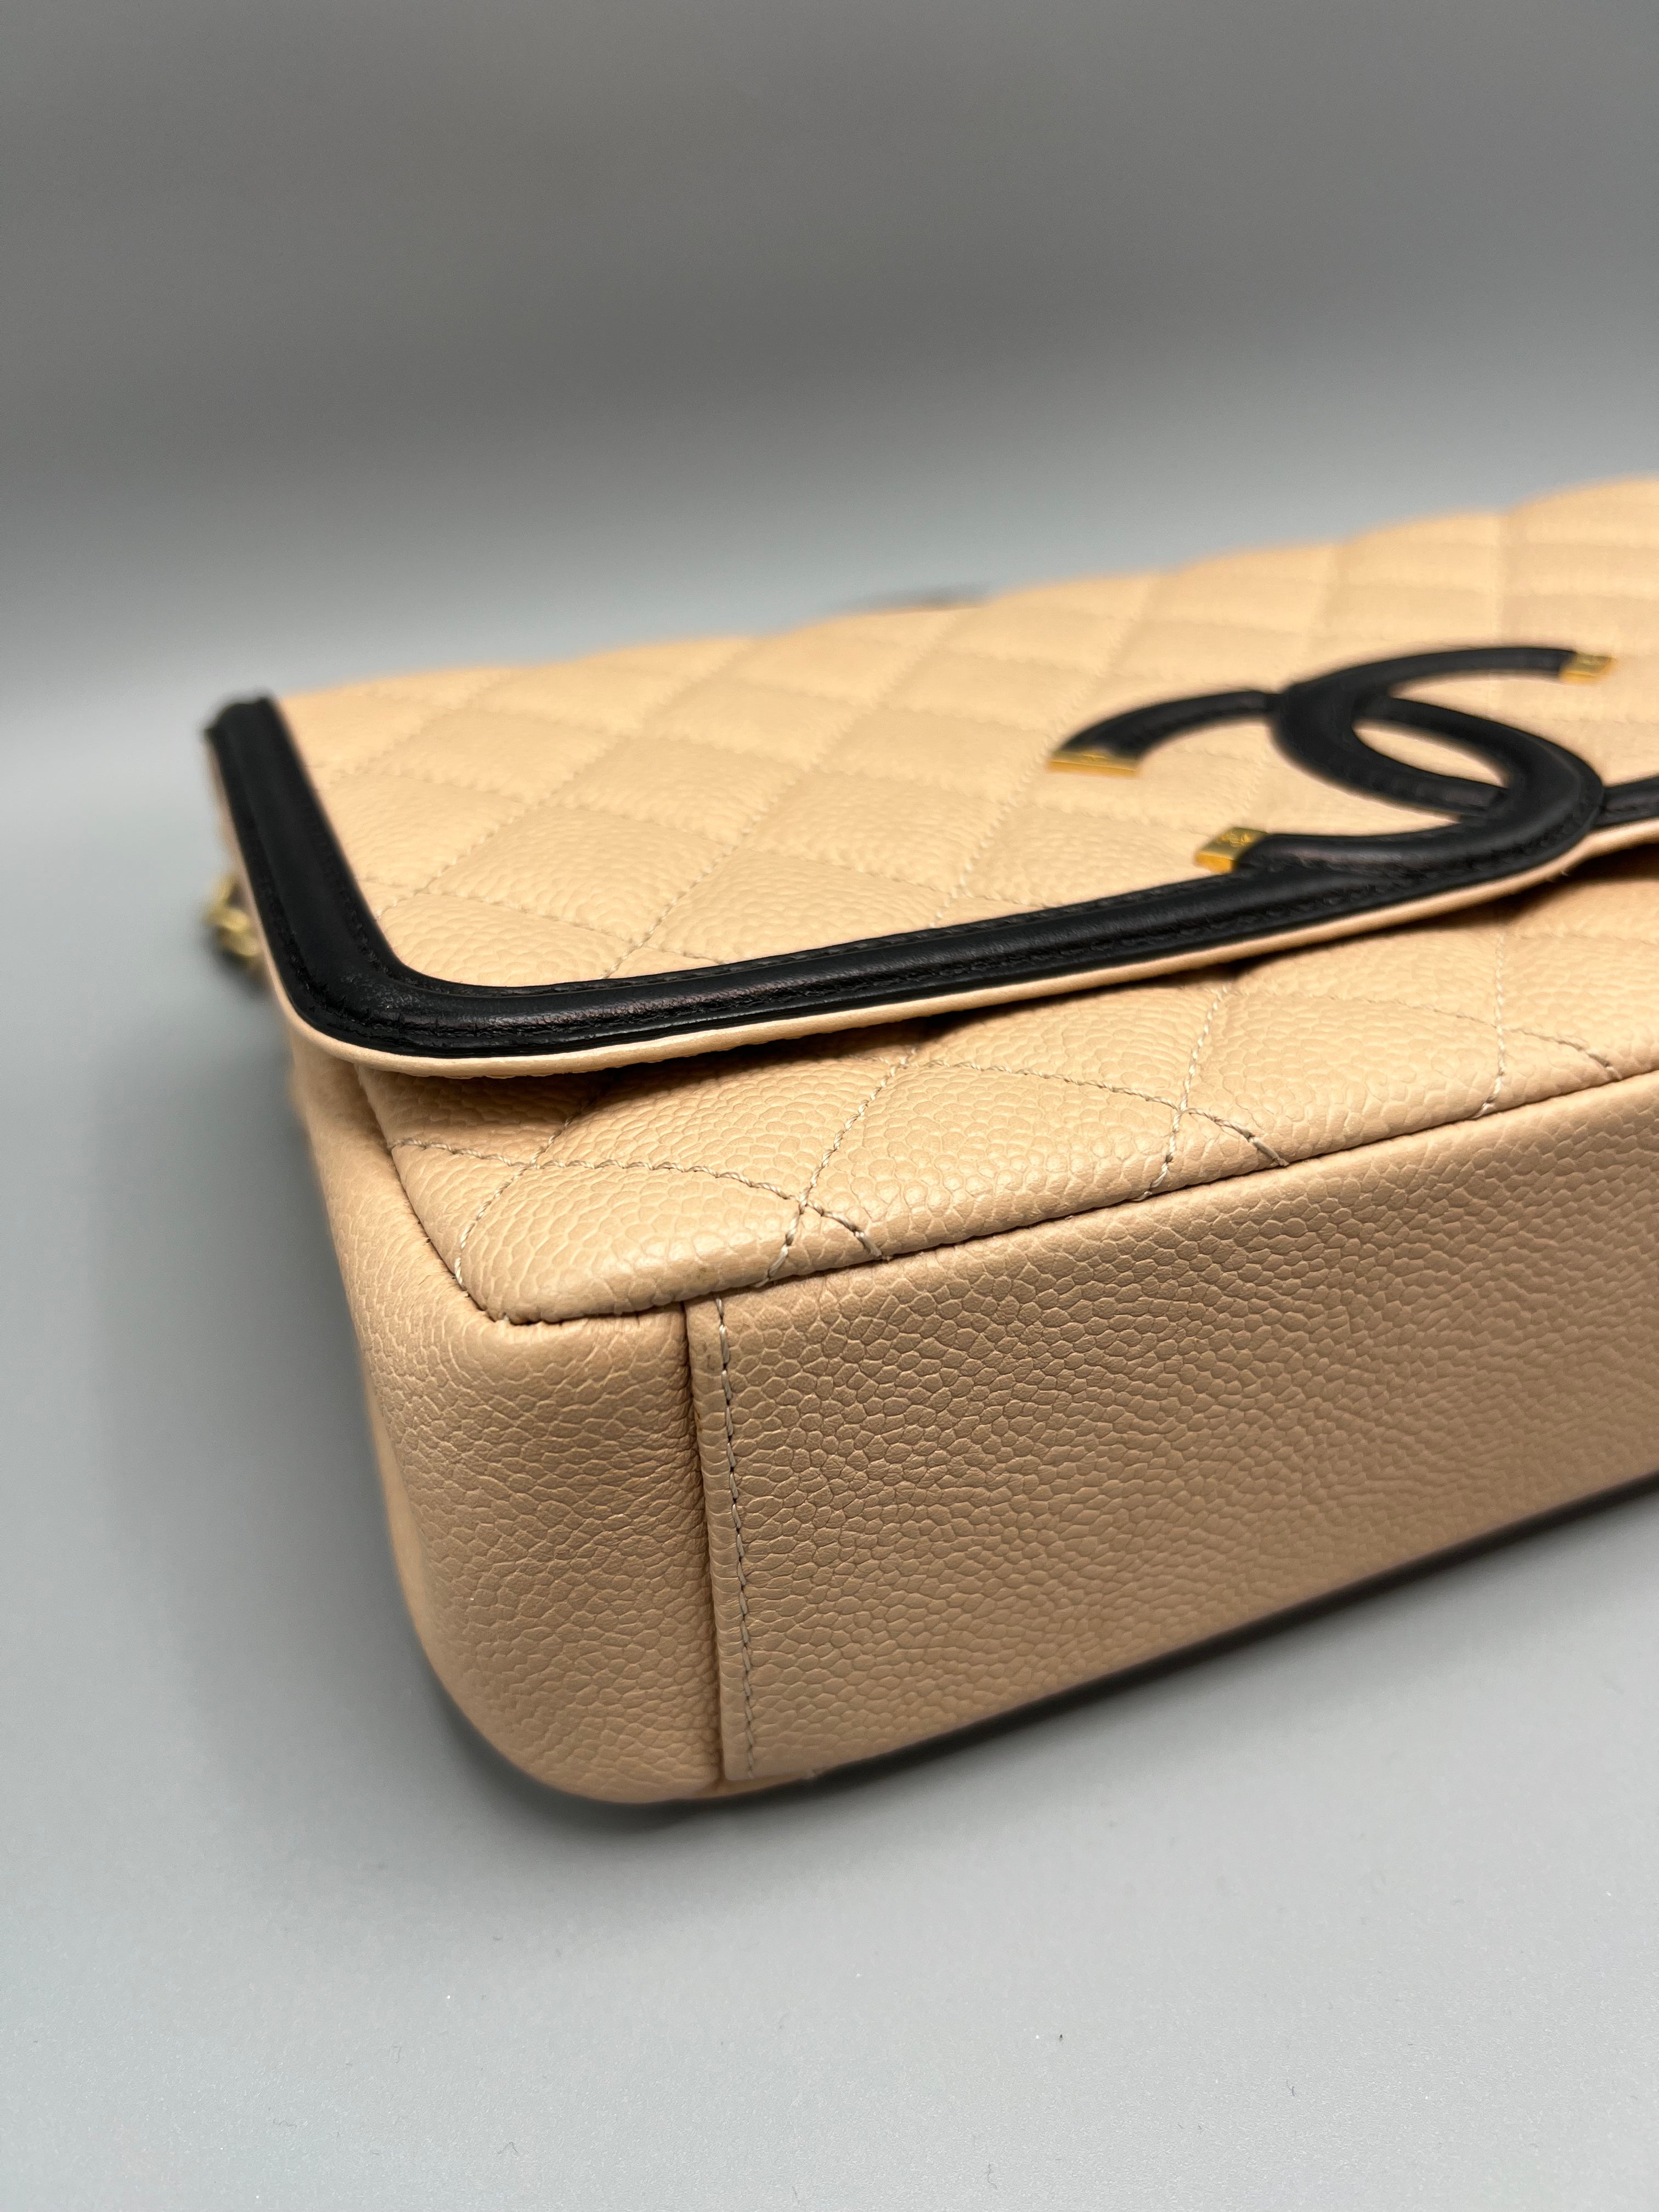 Chanel CC Filigree Medium Flap Bag